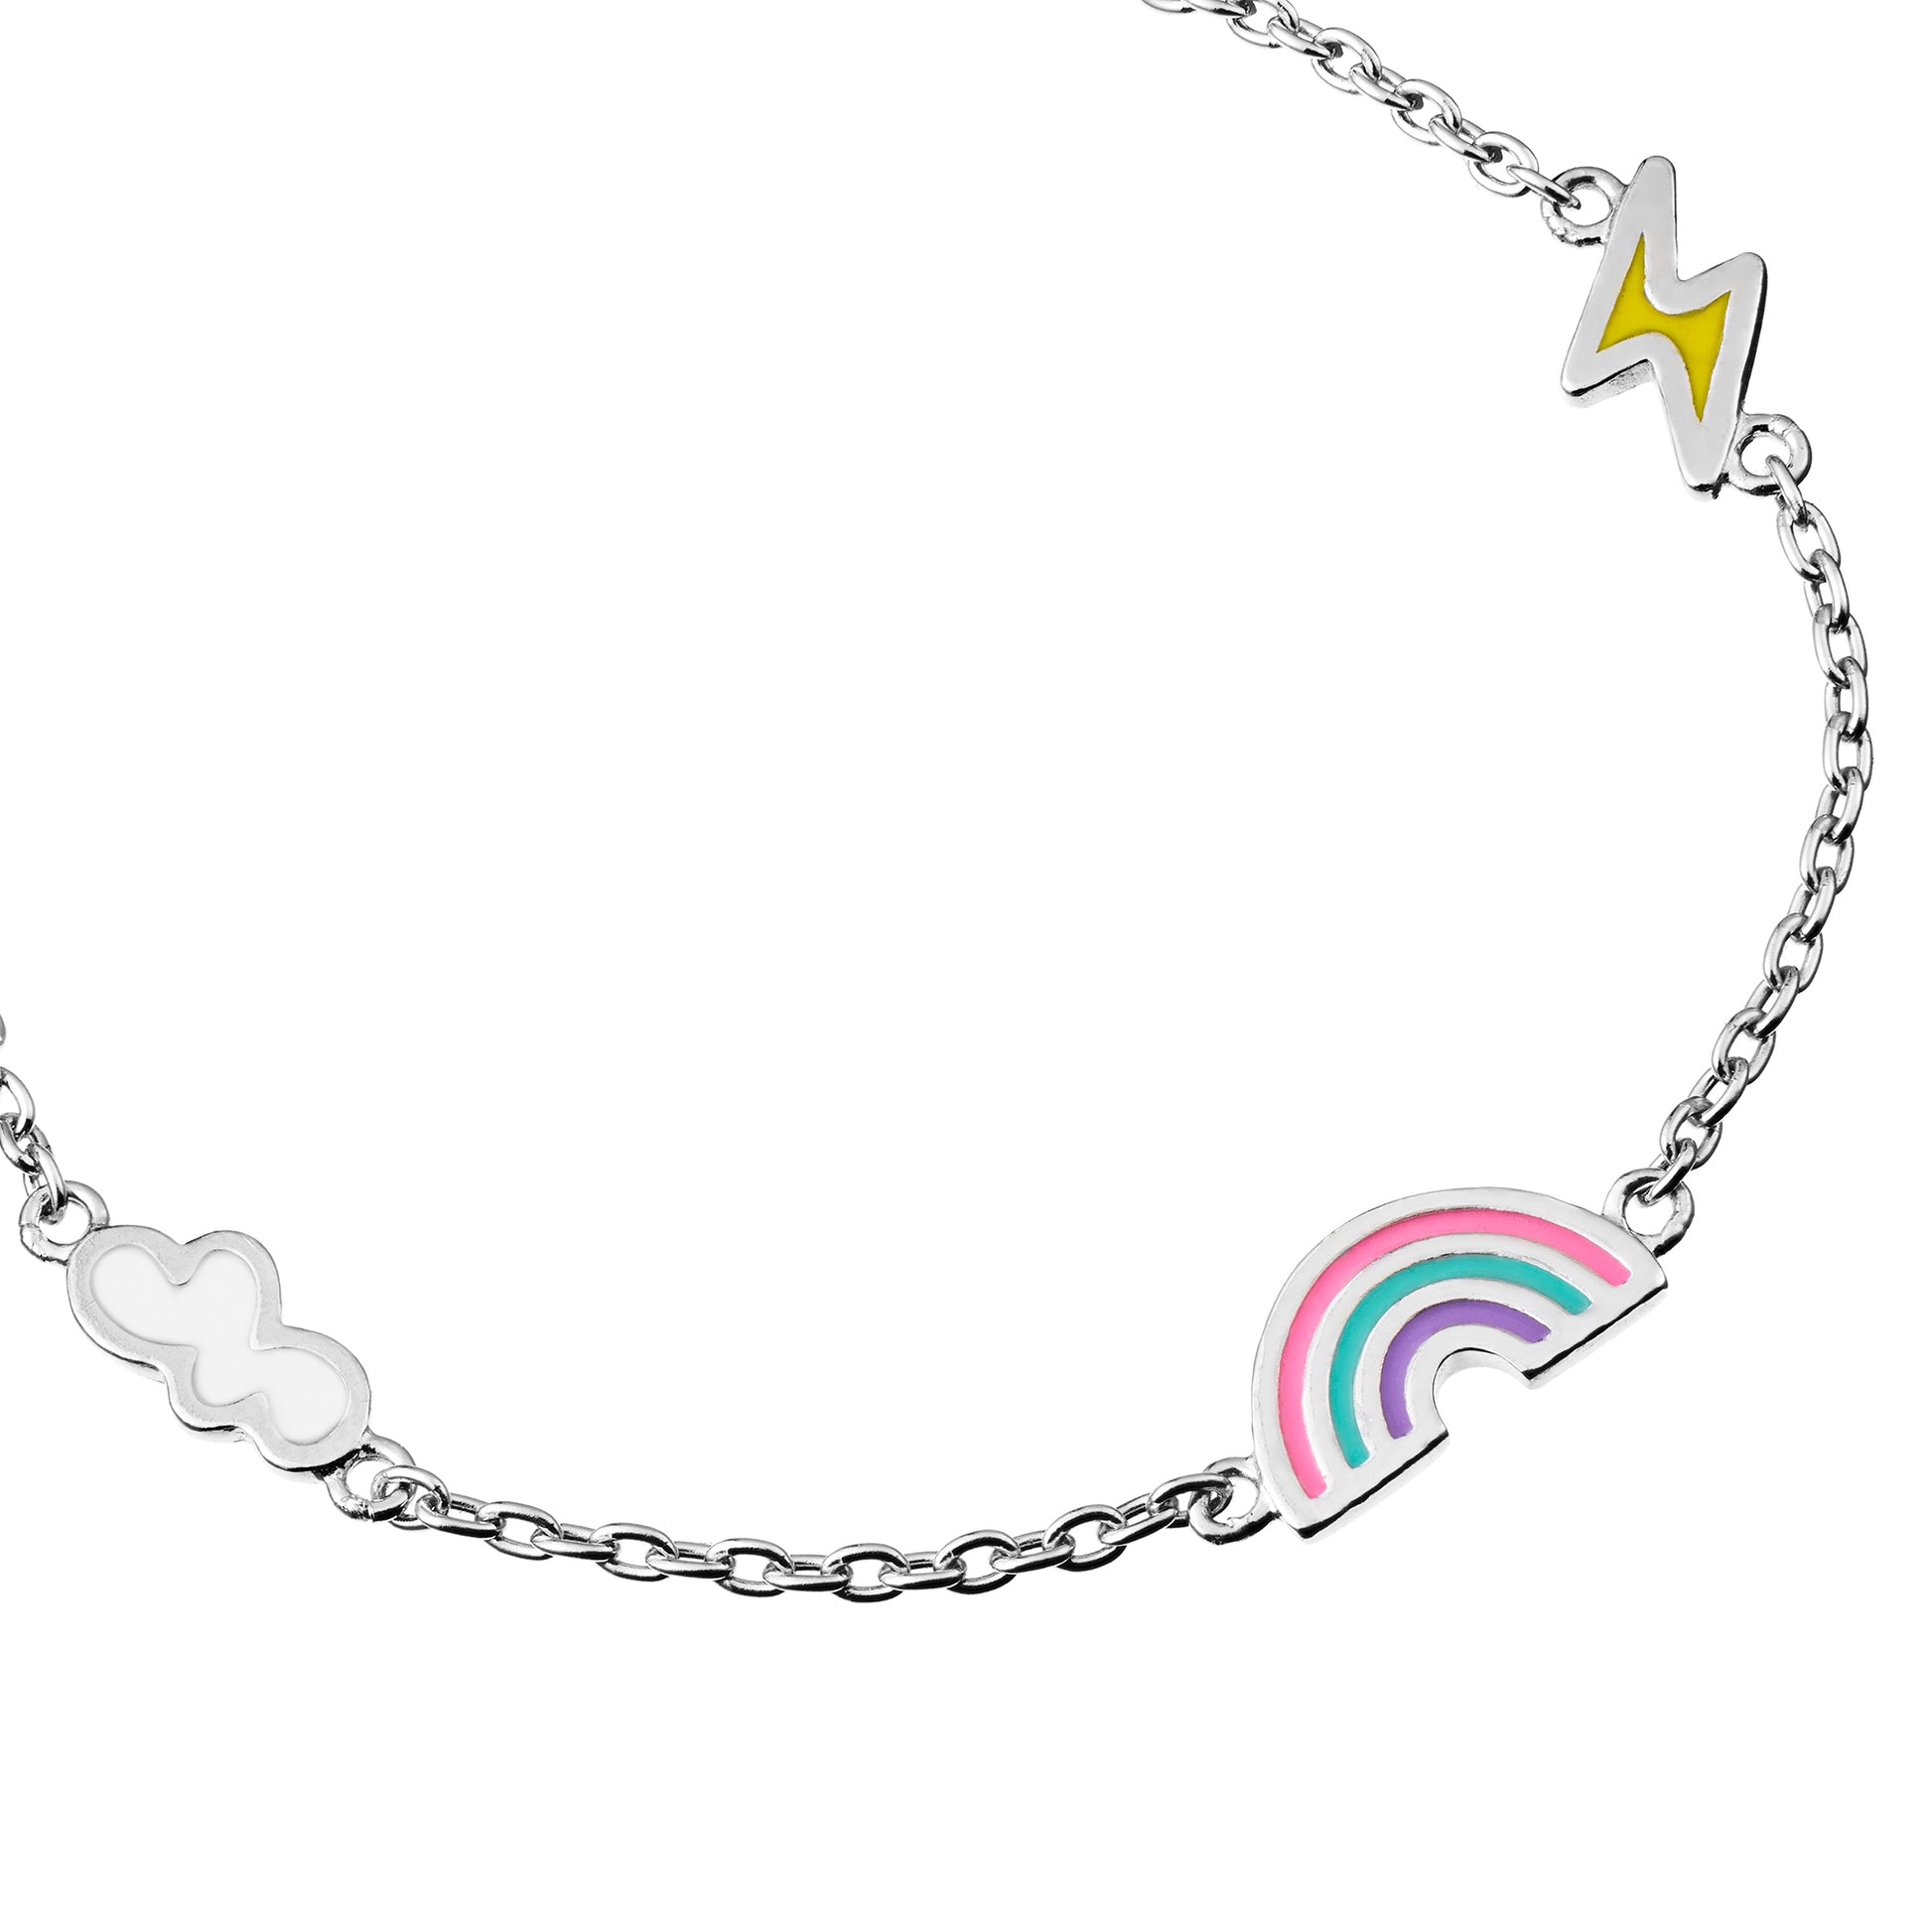 Adjustable silver bracelet with a Cloud, Rainbow and Lightning Bolt charm